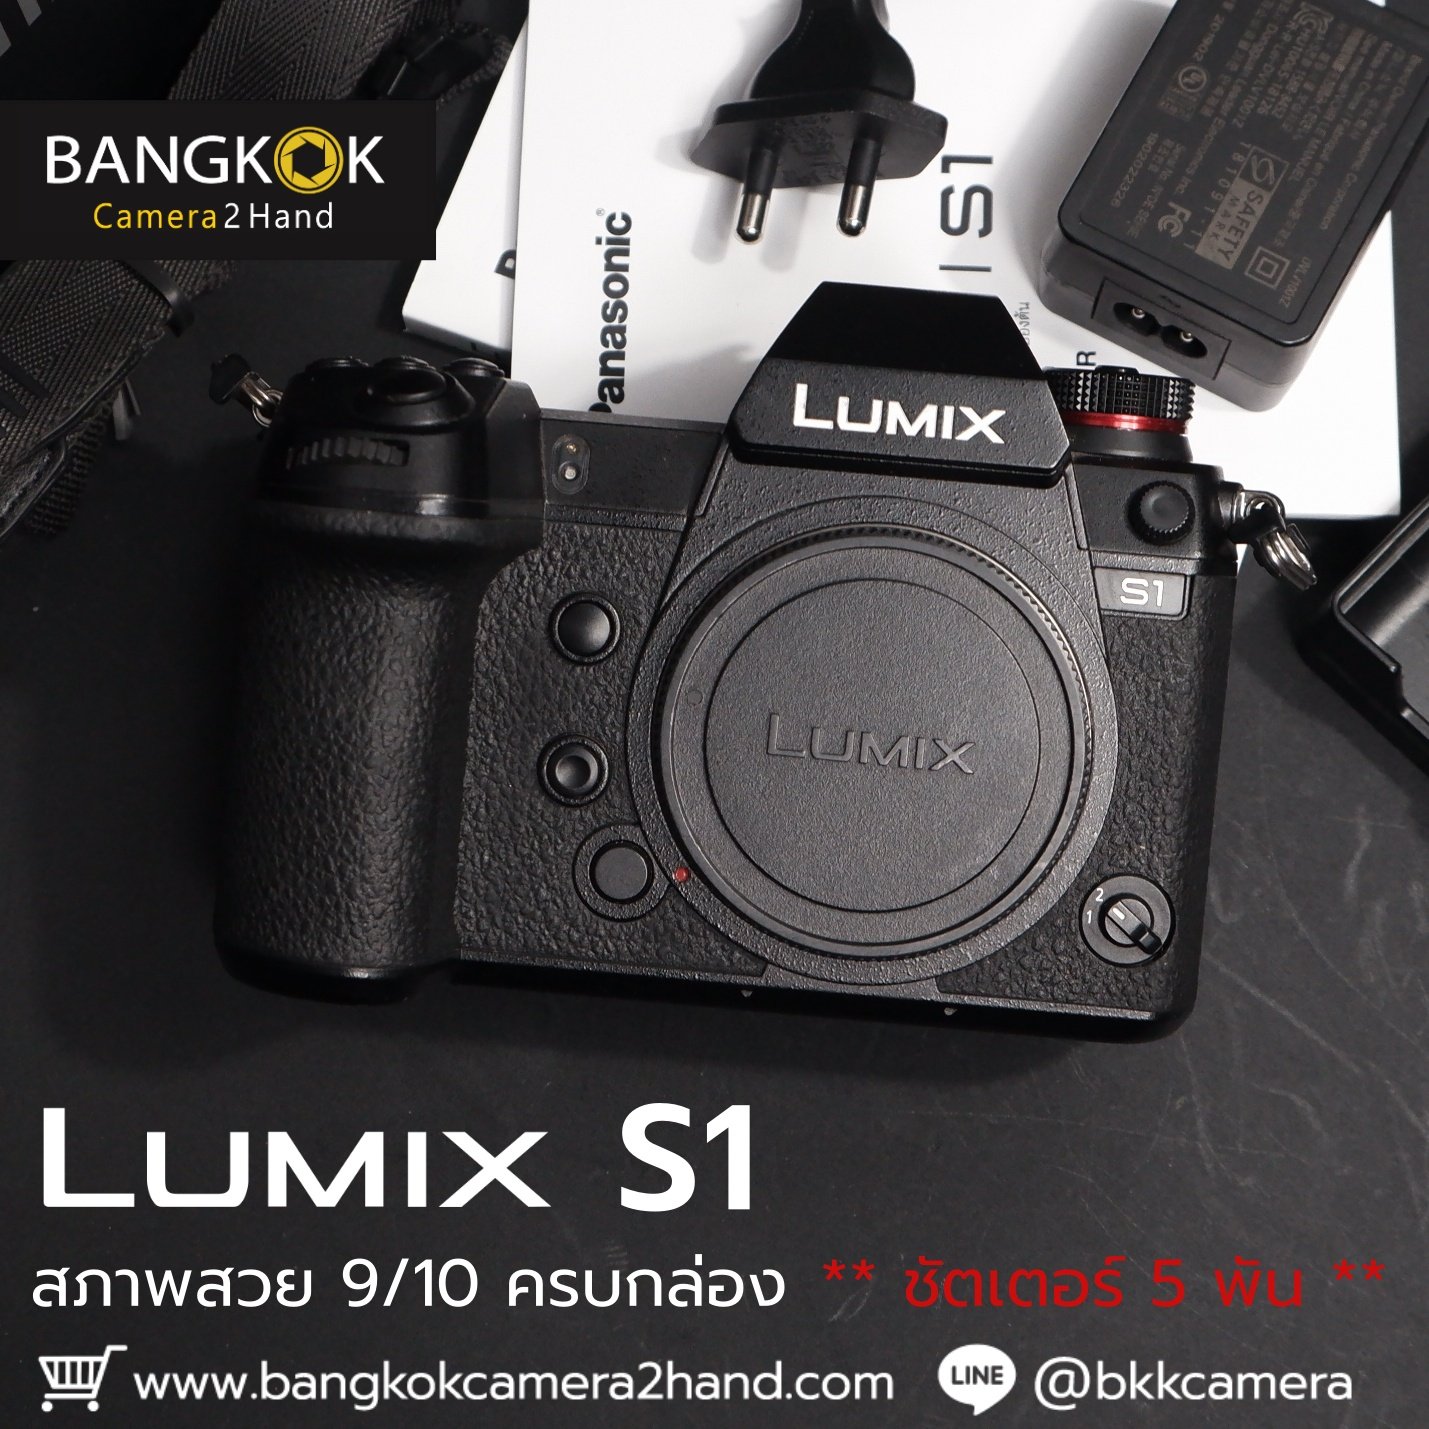 Lumix S1 ครบกล่อง ชัตเตอร์ 5 พัน